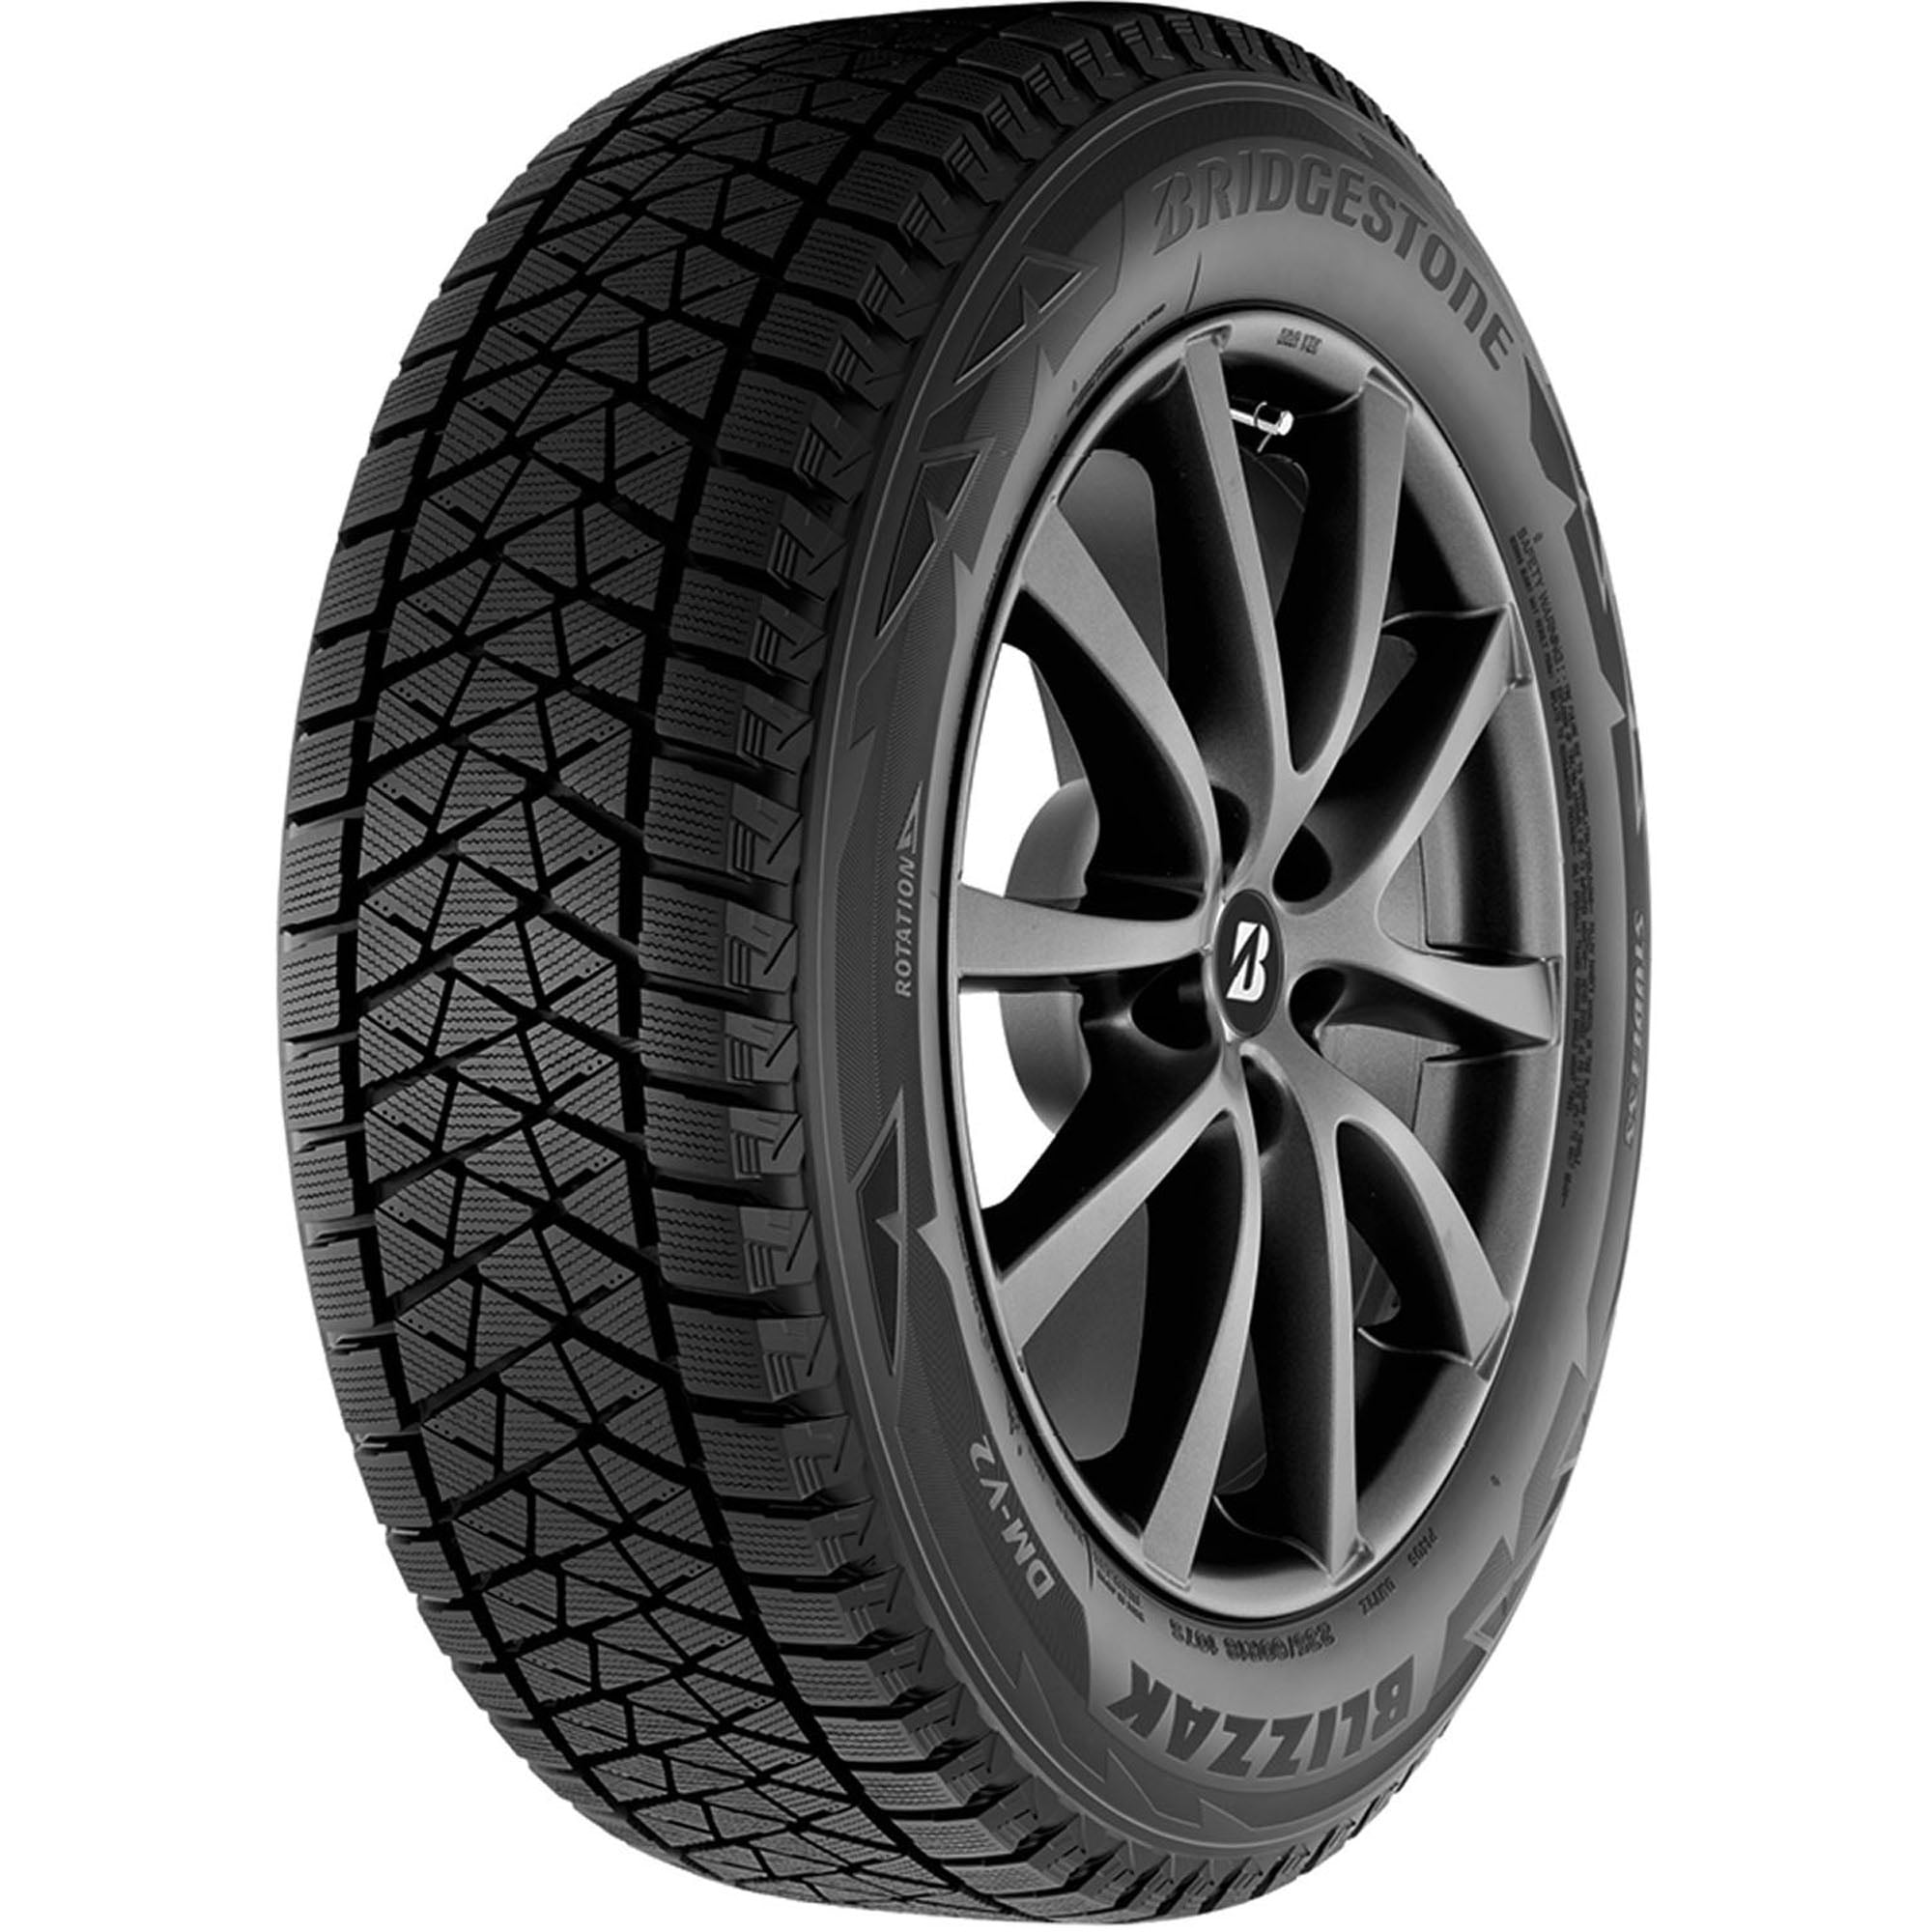 Ultra Goodyear Tire. T 225/65R17 102 Winter Grip